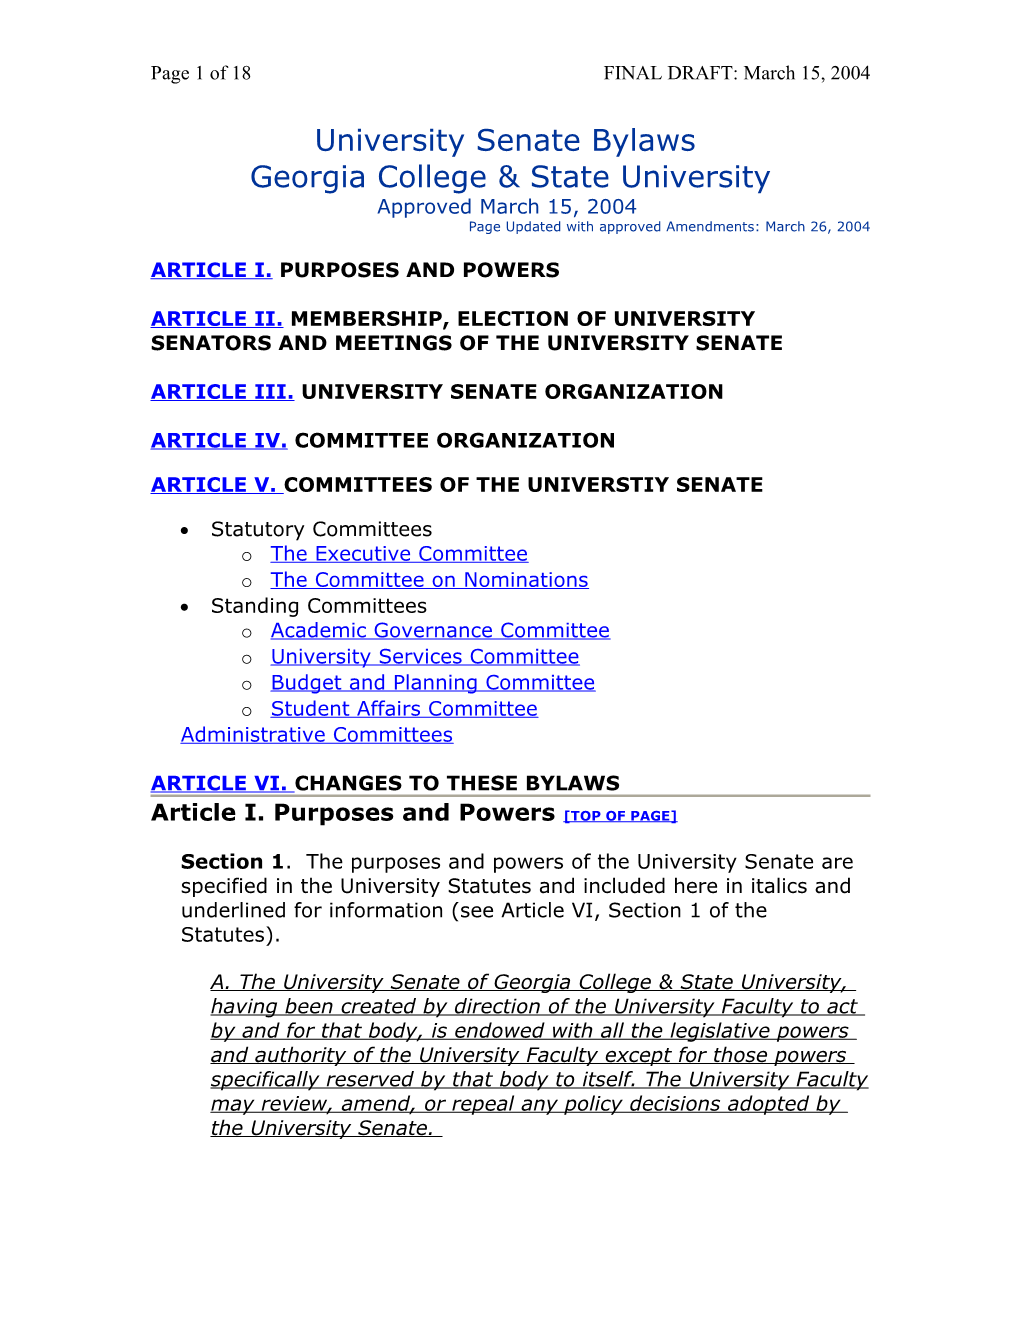 University Senate Bylaws Approved March 24, 2003